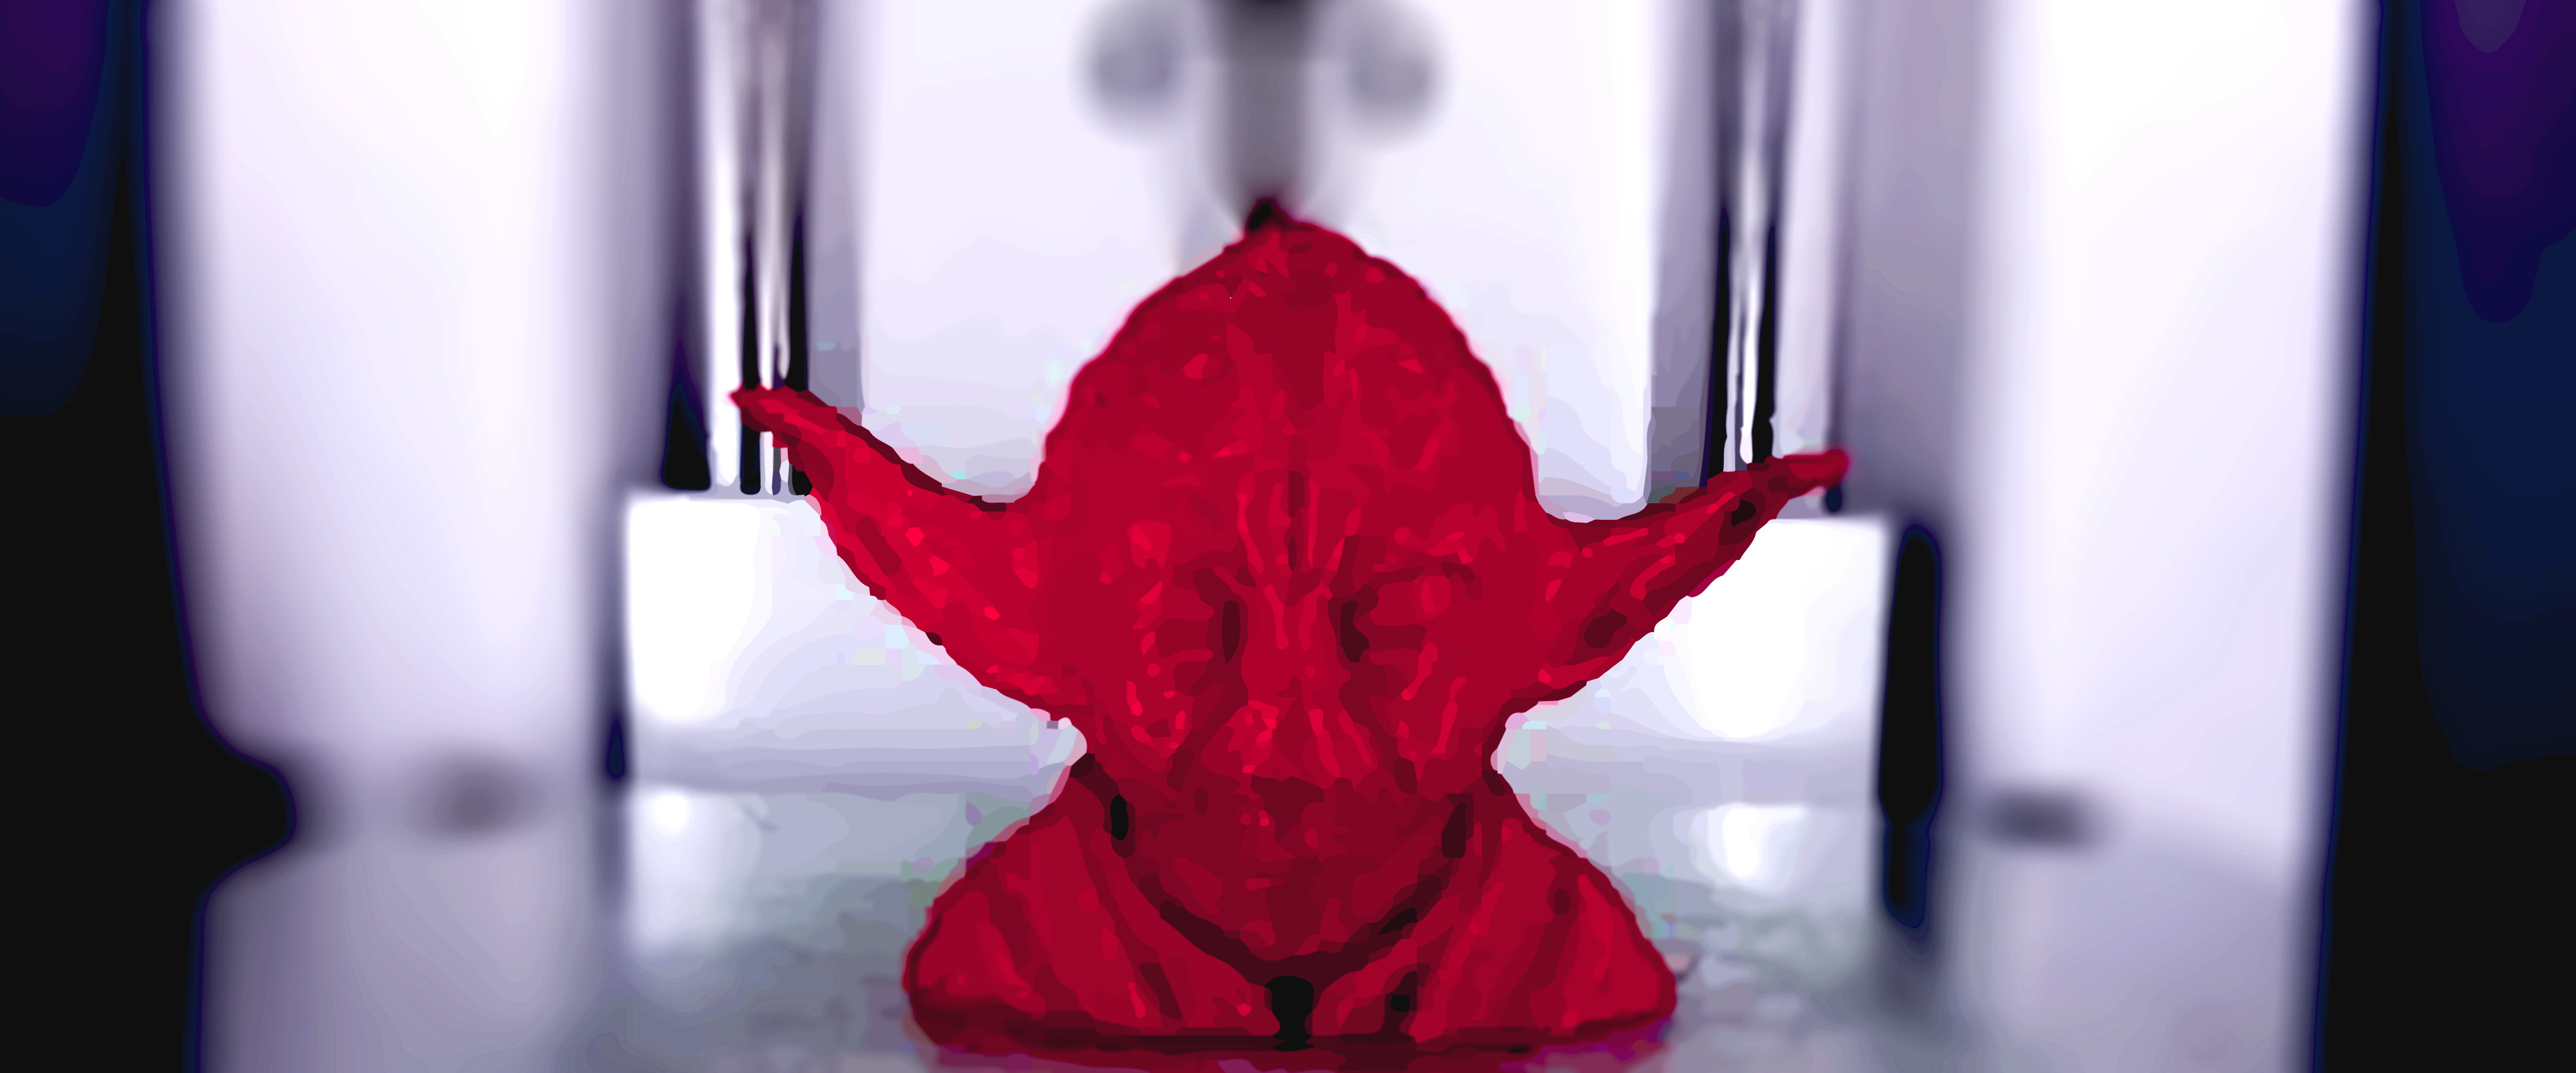 Impresión 3D: Crea tu "Cubo de Compañía" 6